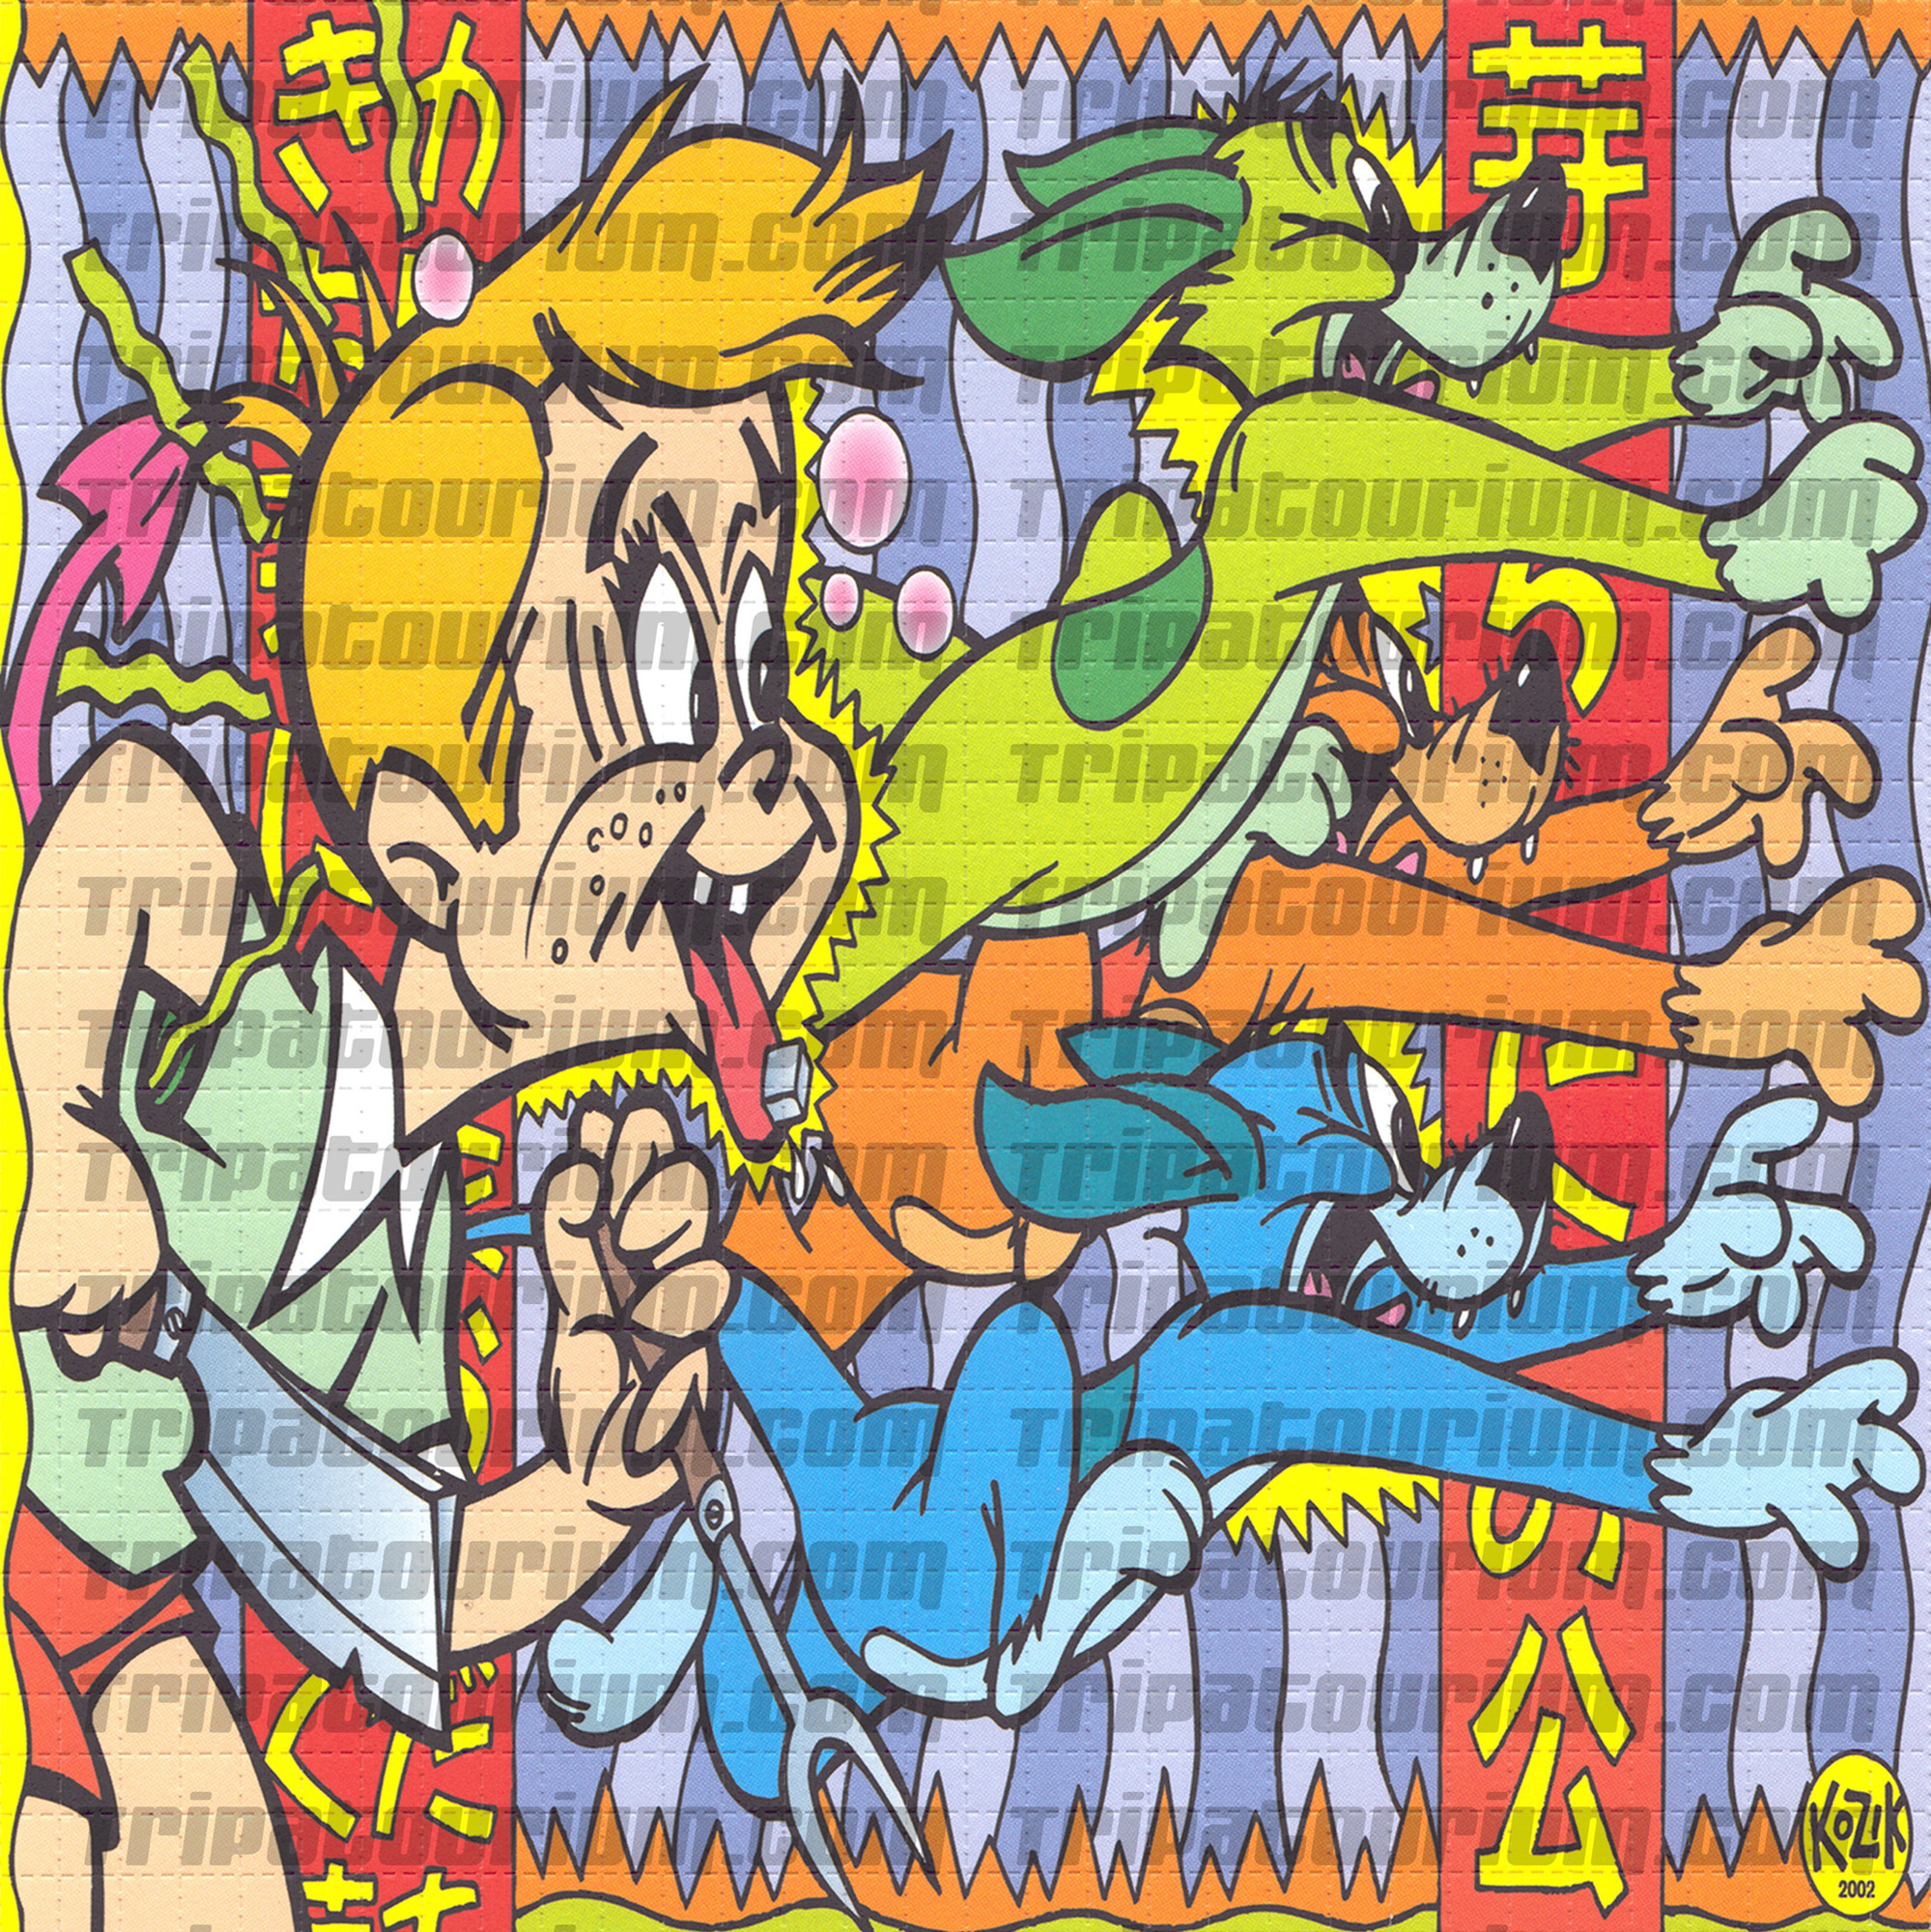 A scan of the LSD Blotter Art Print Tribute to Preston Blair by Frank Kozik